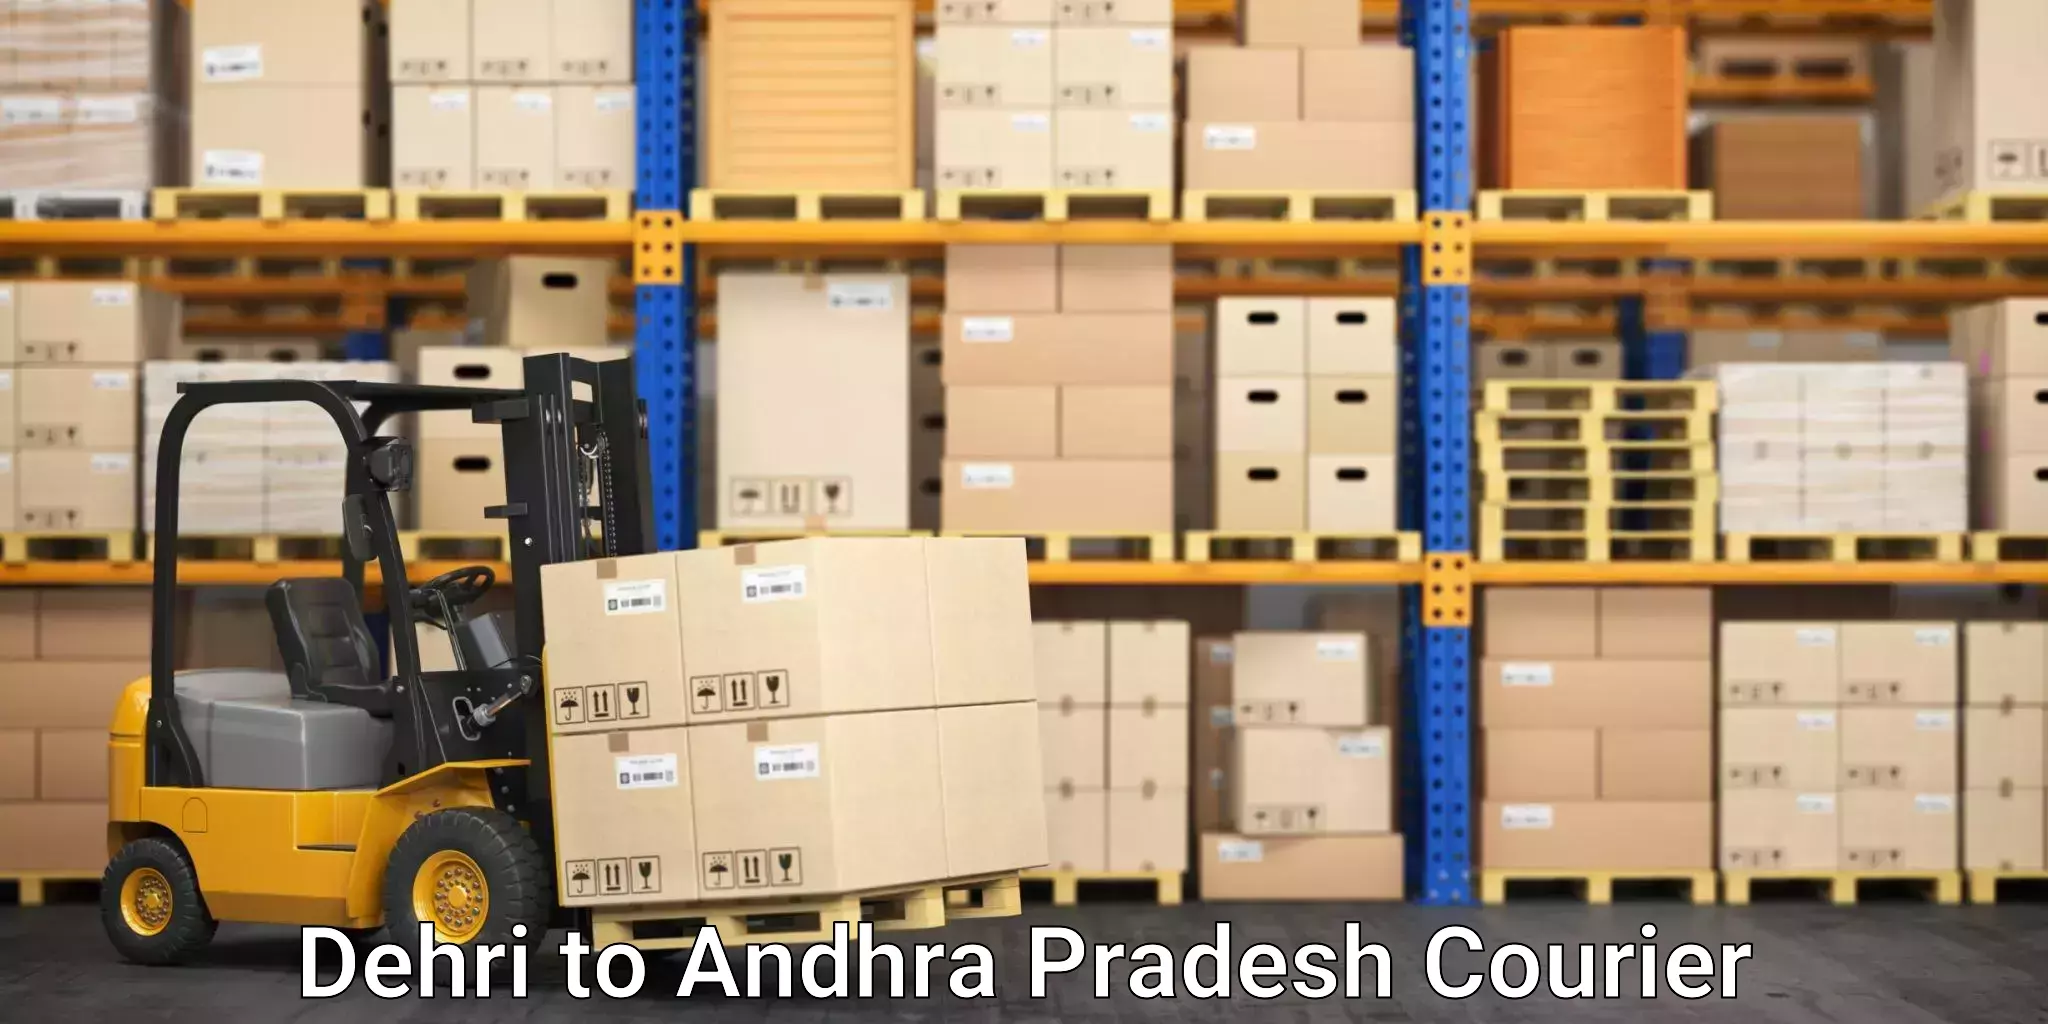 Reliable goods transport in Dehri to Andhra Pradesh